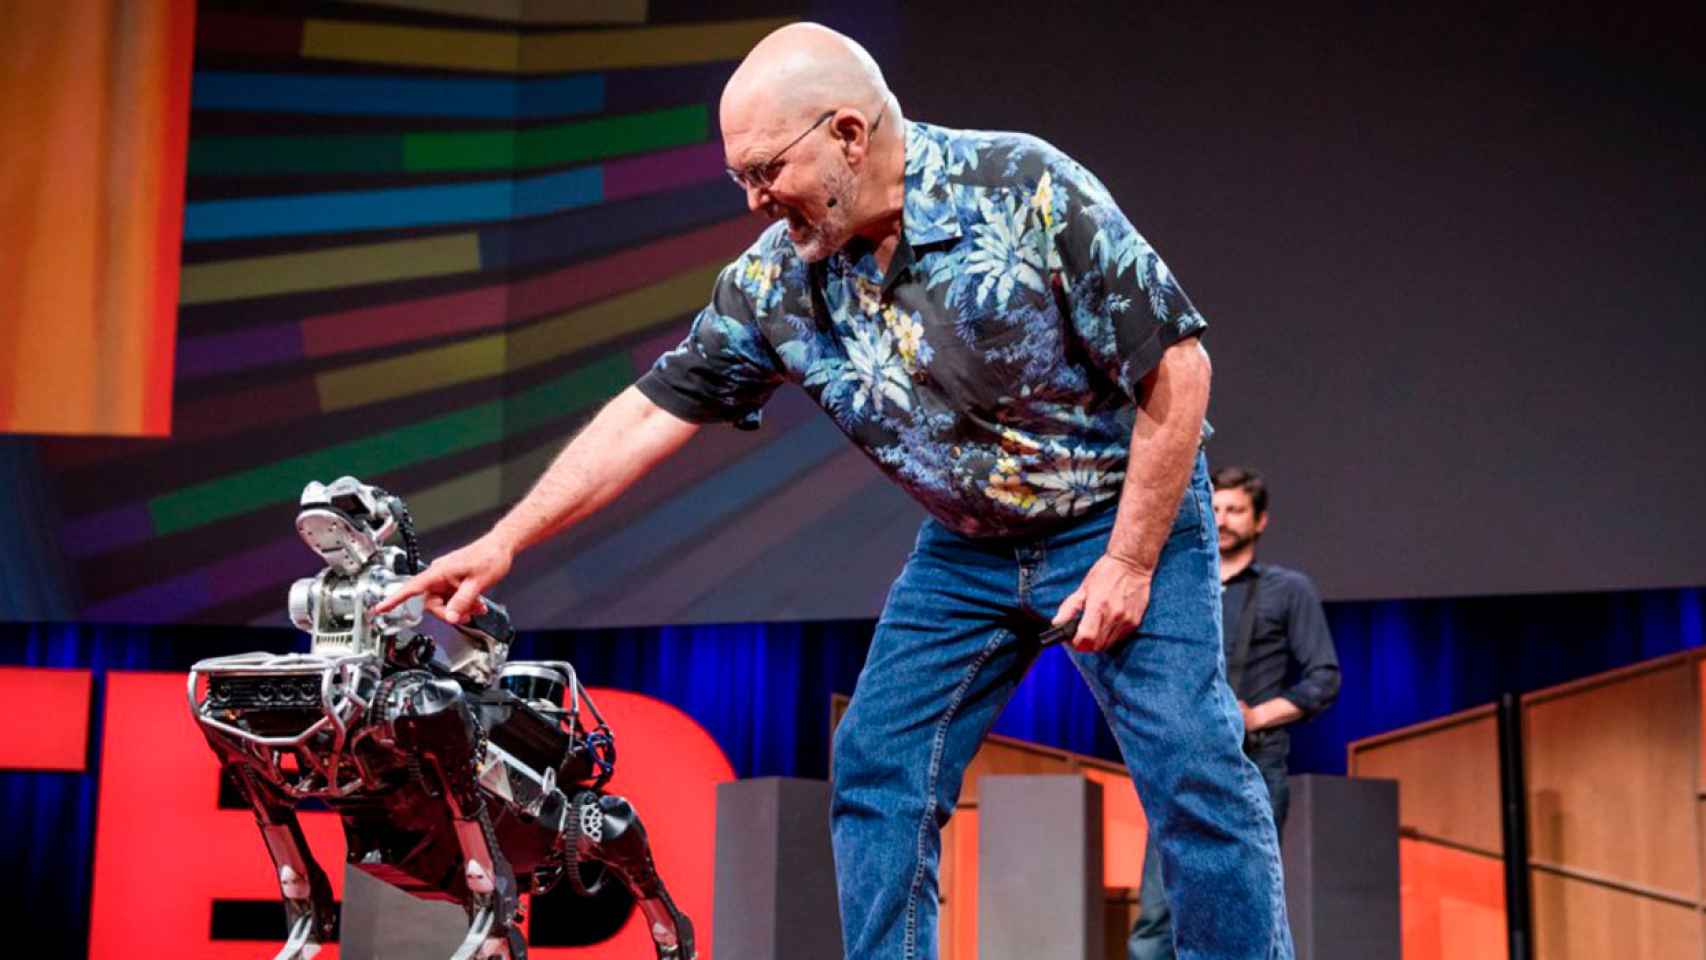 Marc Raibert con SpotMini durante una charla del TED, en una imagen de archivo.